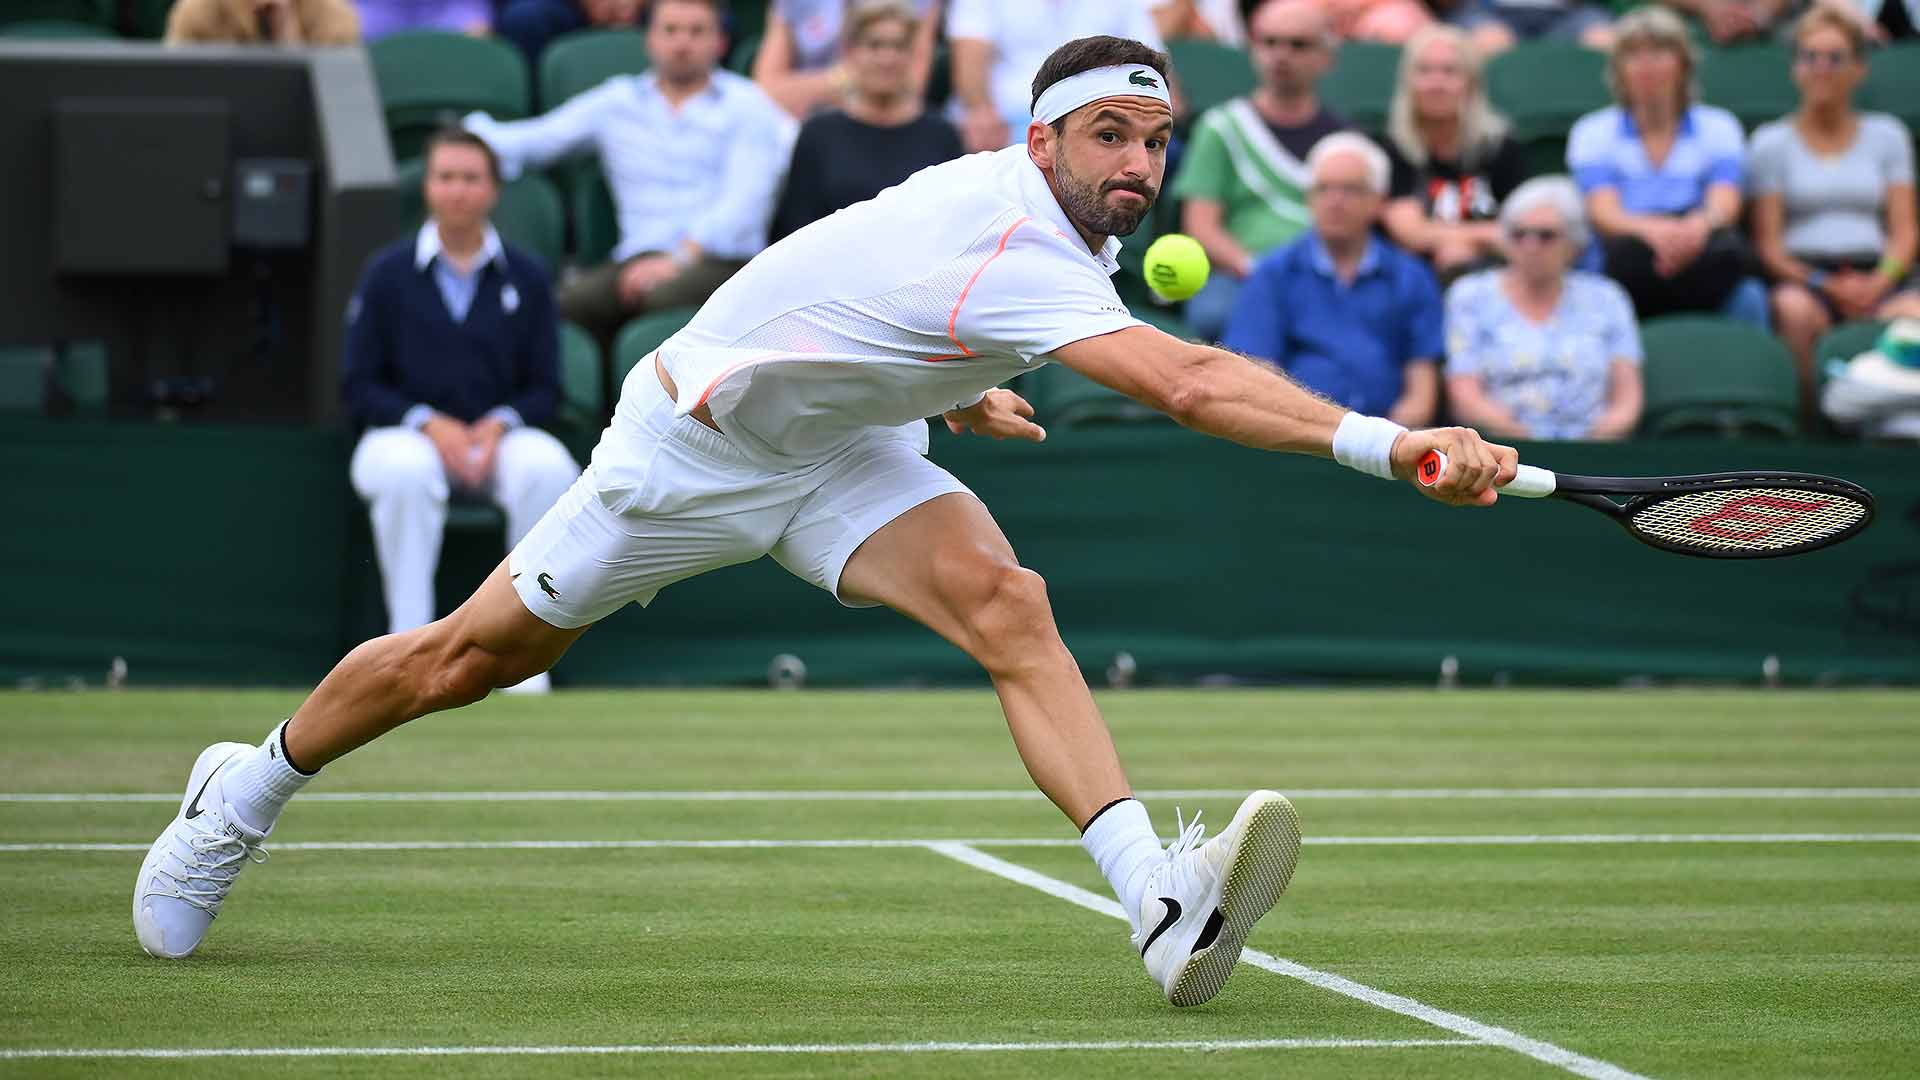 Grigor Dimitrov reached the Wimbledon semi-finals in 2014.